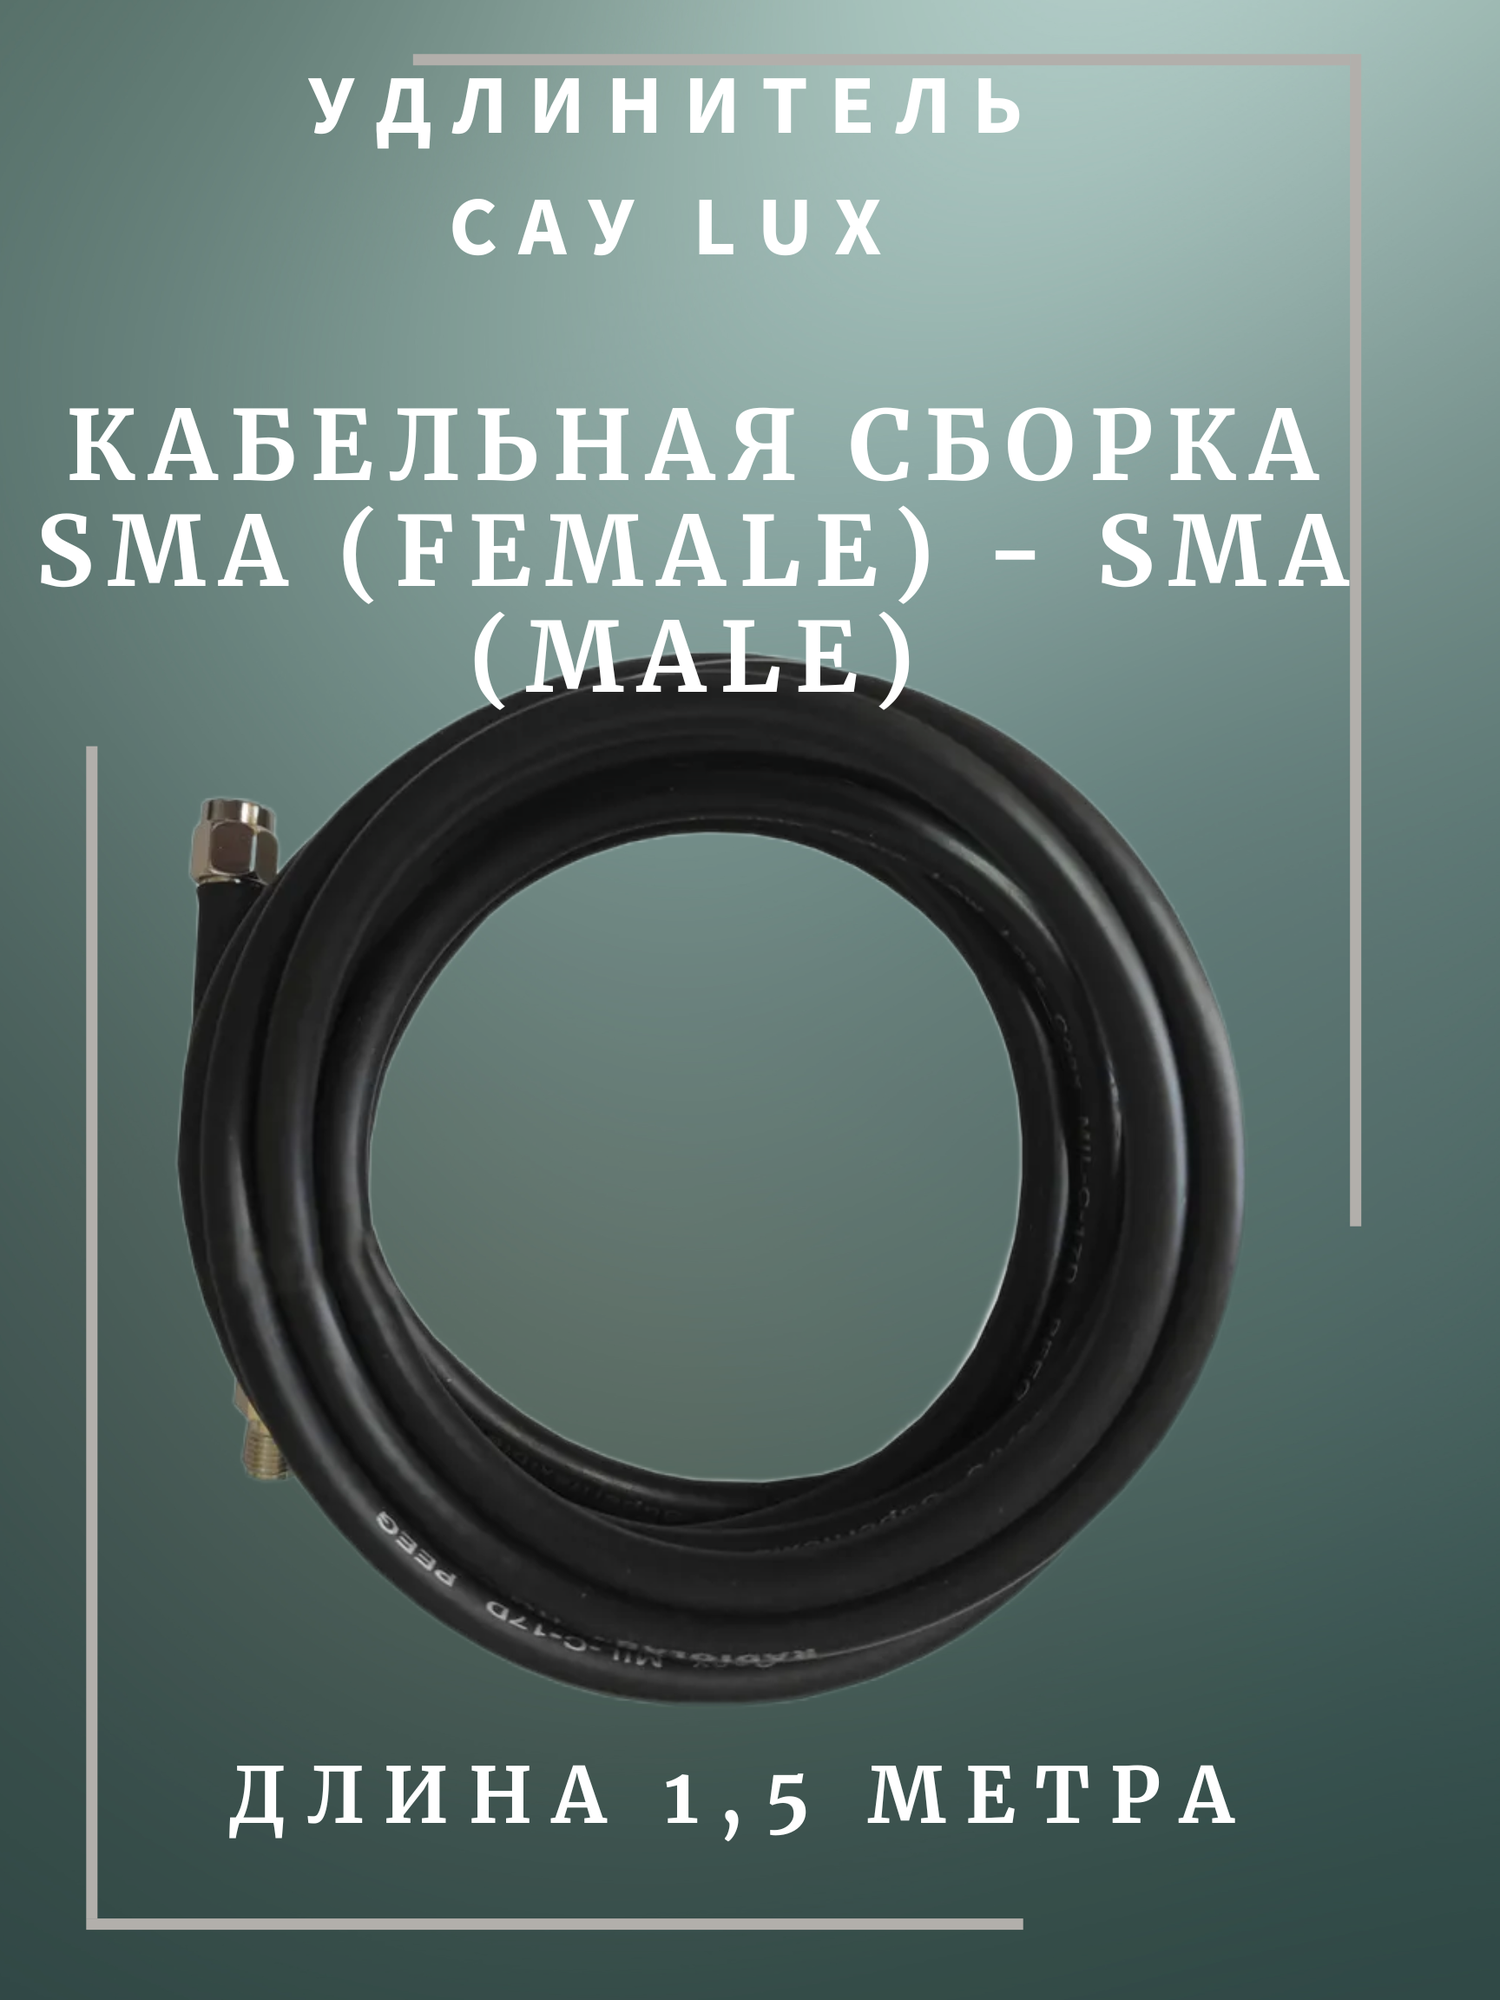 САУ-1,5 LUX Триада. Кабельная сборка SMA (female) - SMA (male) 1,5 метра кабель RADIOLAB Rg-58 a/u 50 Ом